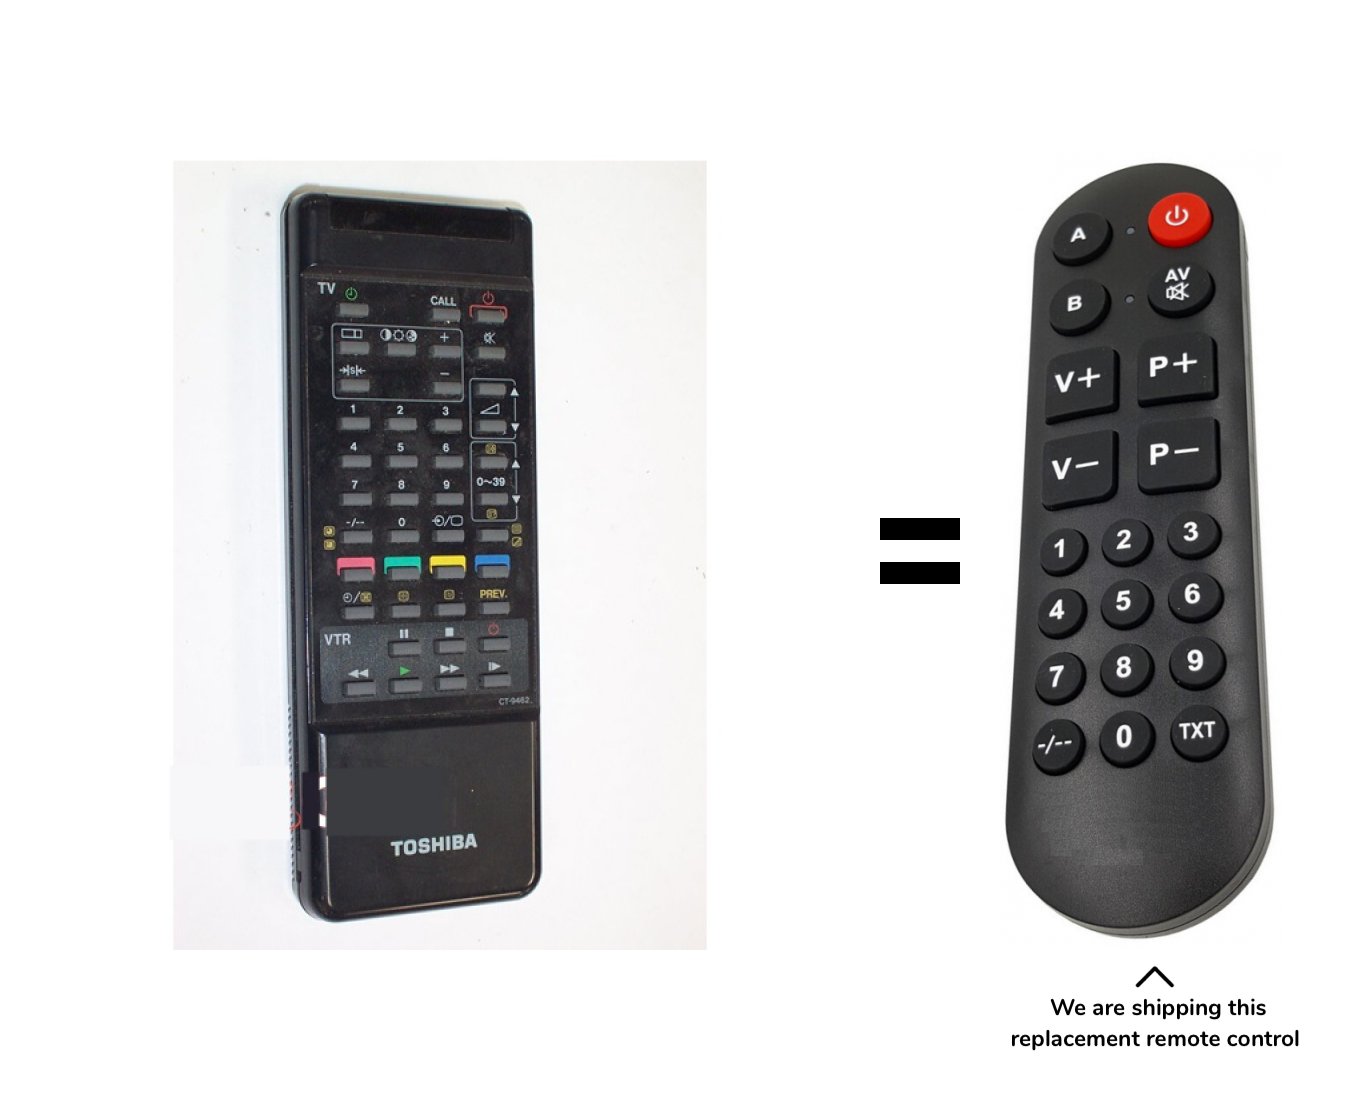 Toshiba 1400RD remote control for seniors